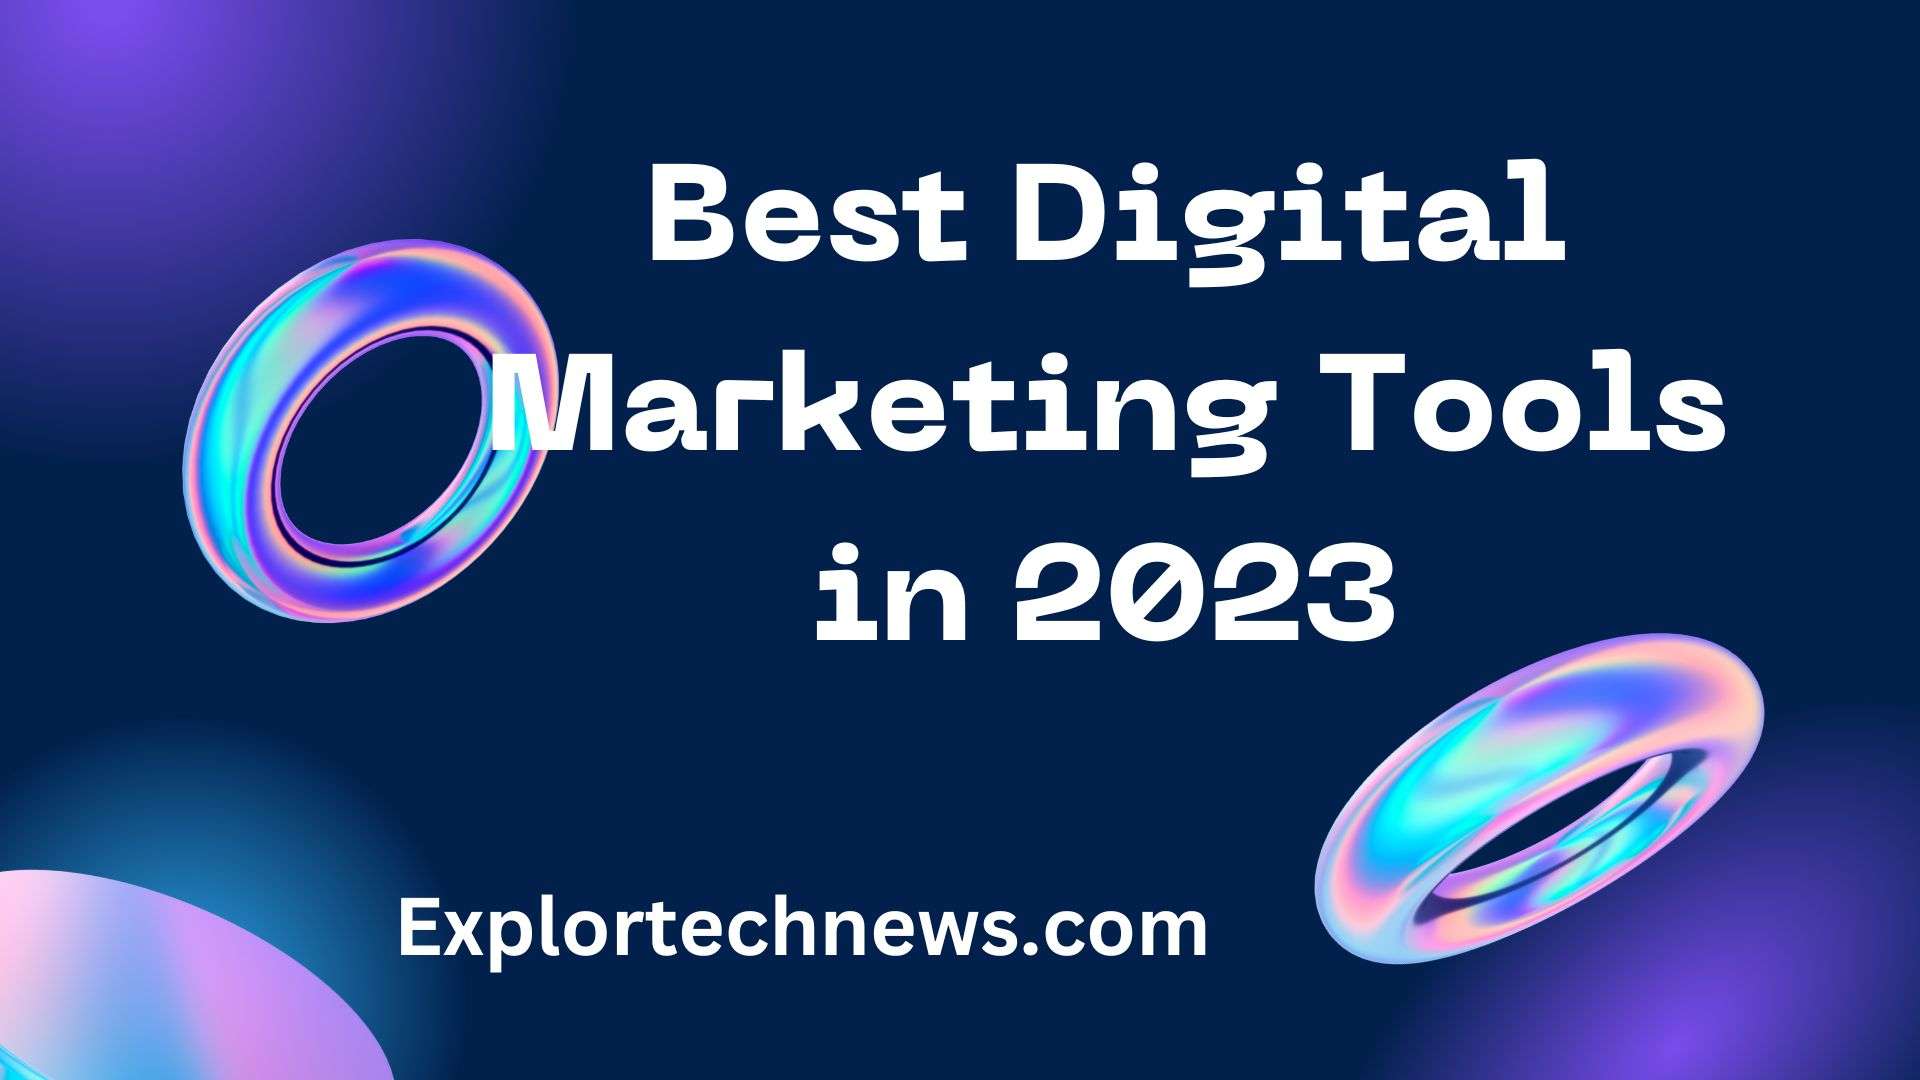 Best Digital Marketing Tools in 2023